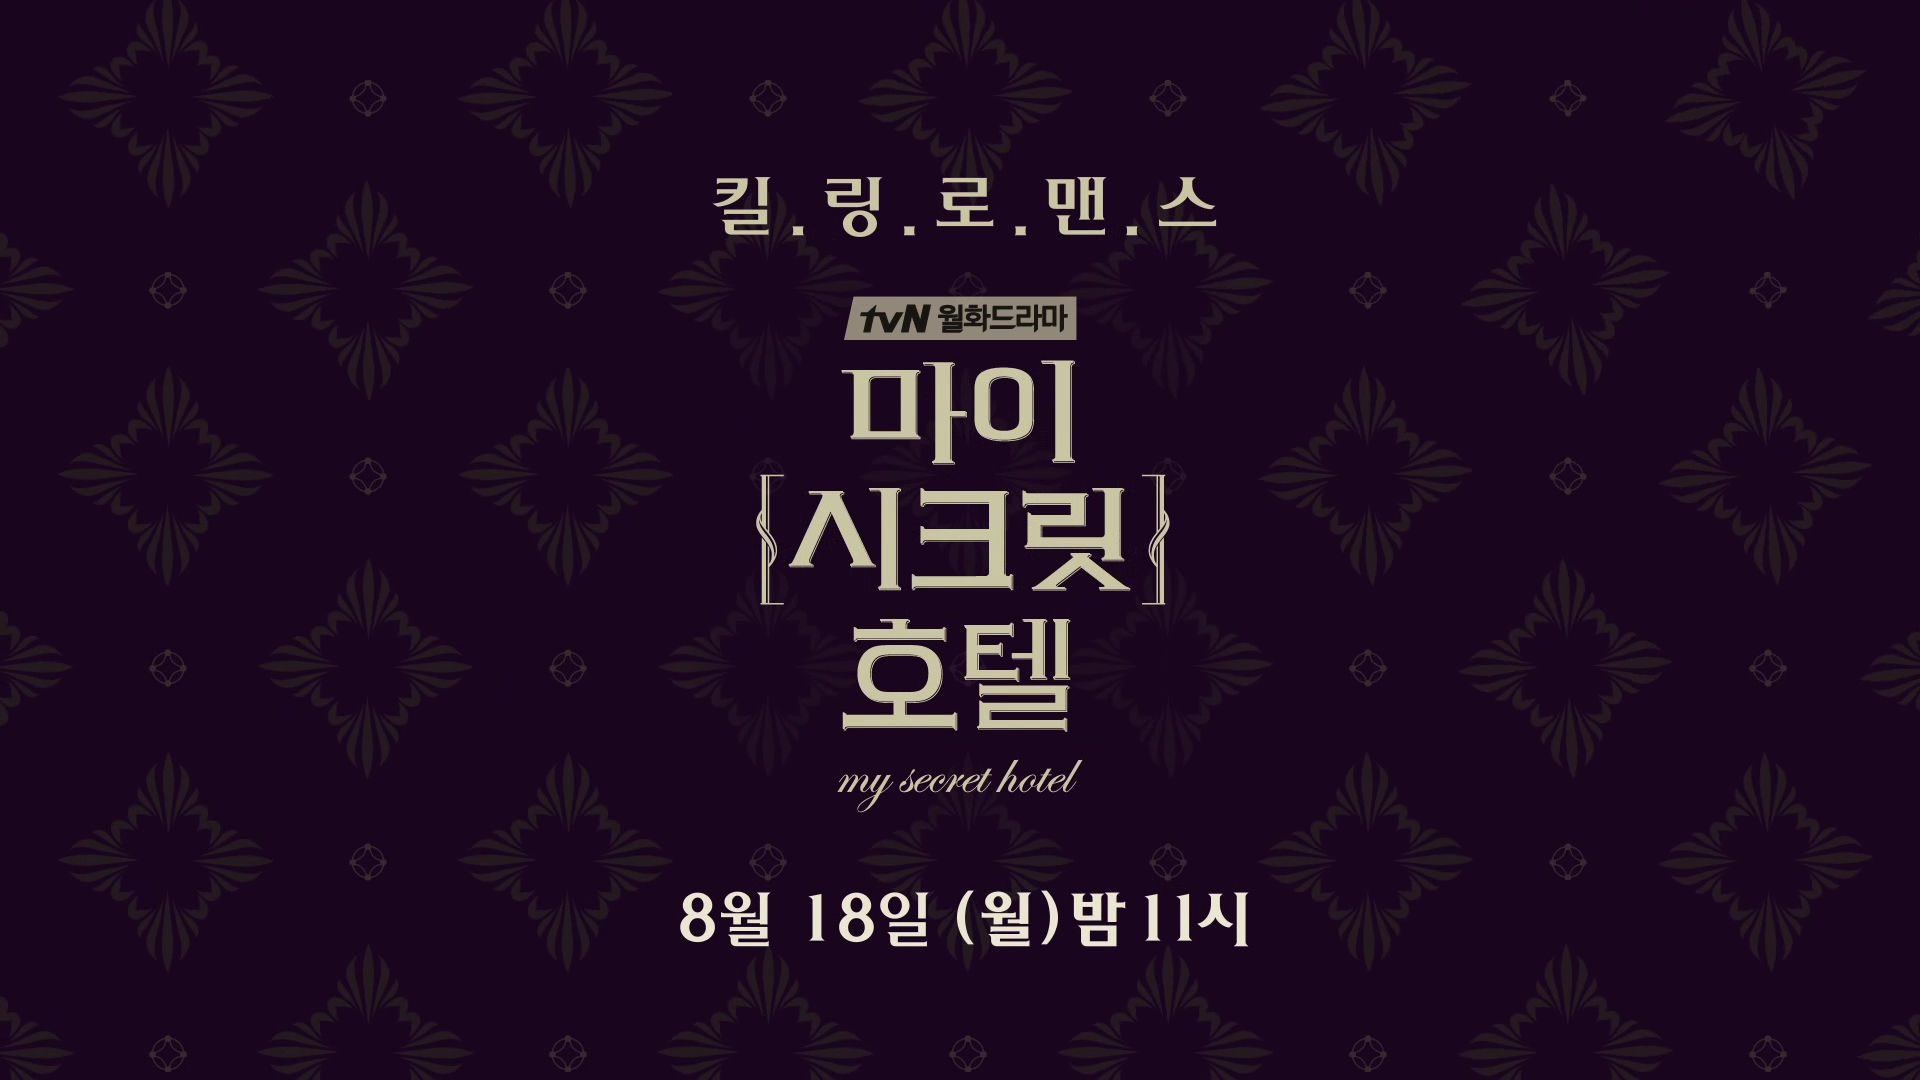 tvN킬링로맨스_마이시크릿호텔_8월18일첫방송_티티저15초.wmv_000013799.jpg